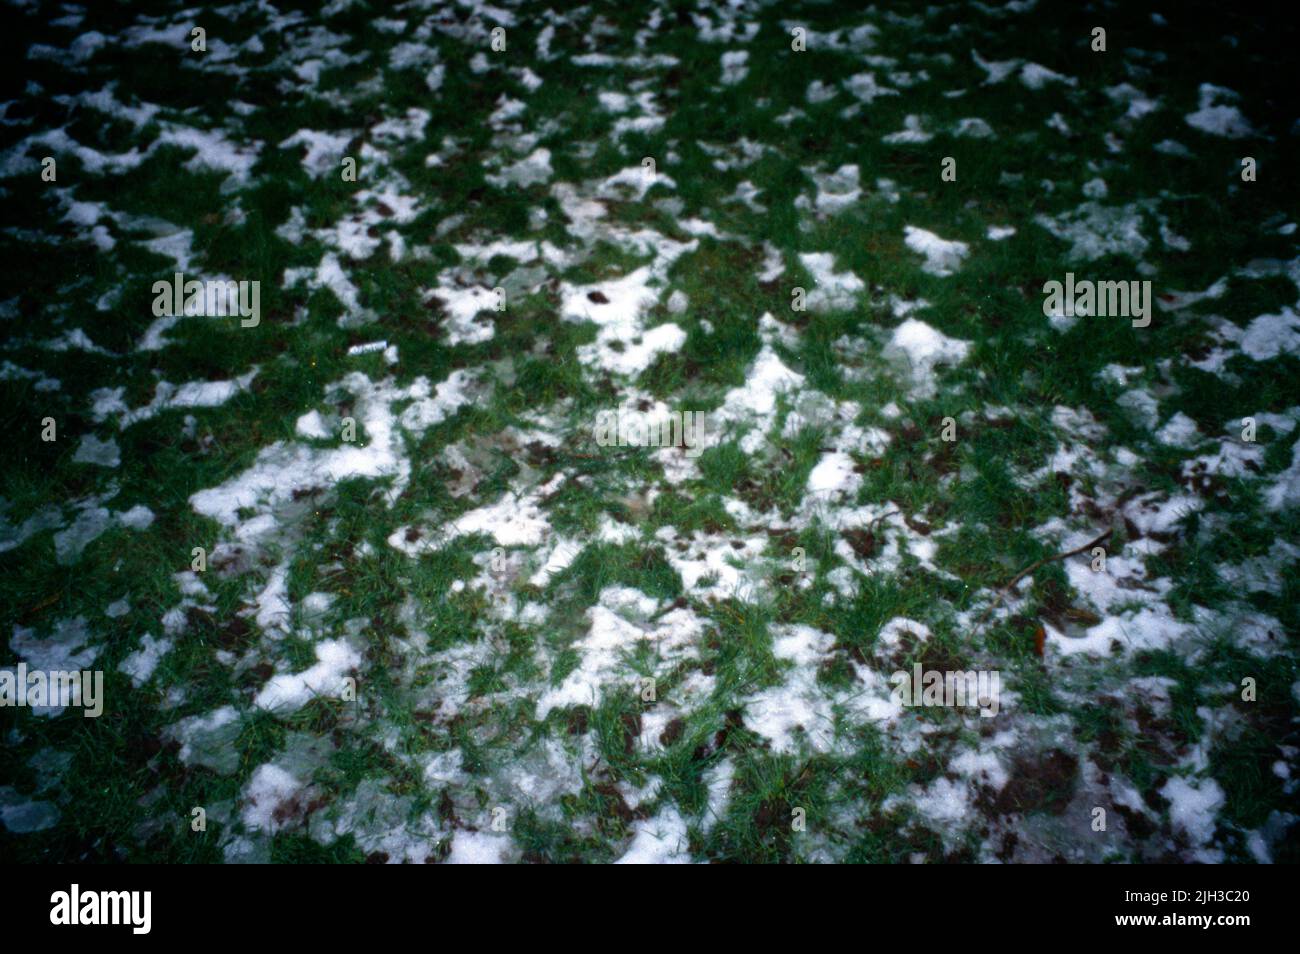 Melting Snow on Grass Stock Photo